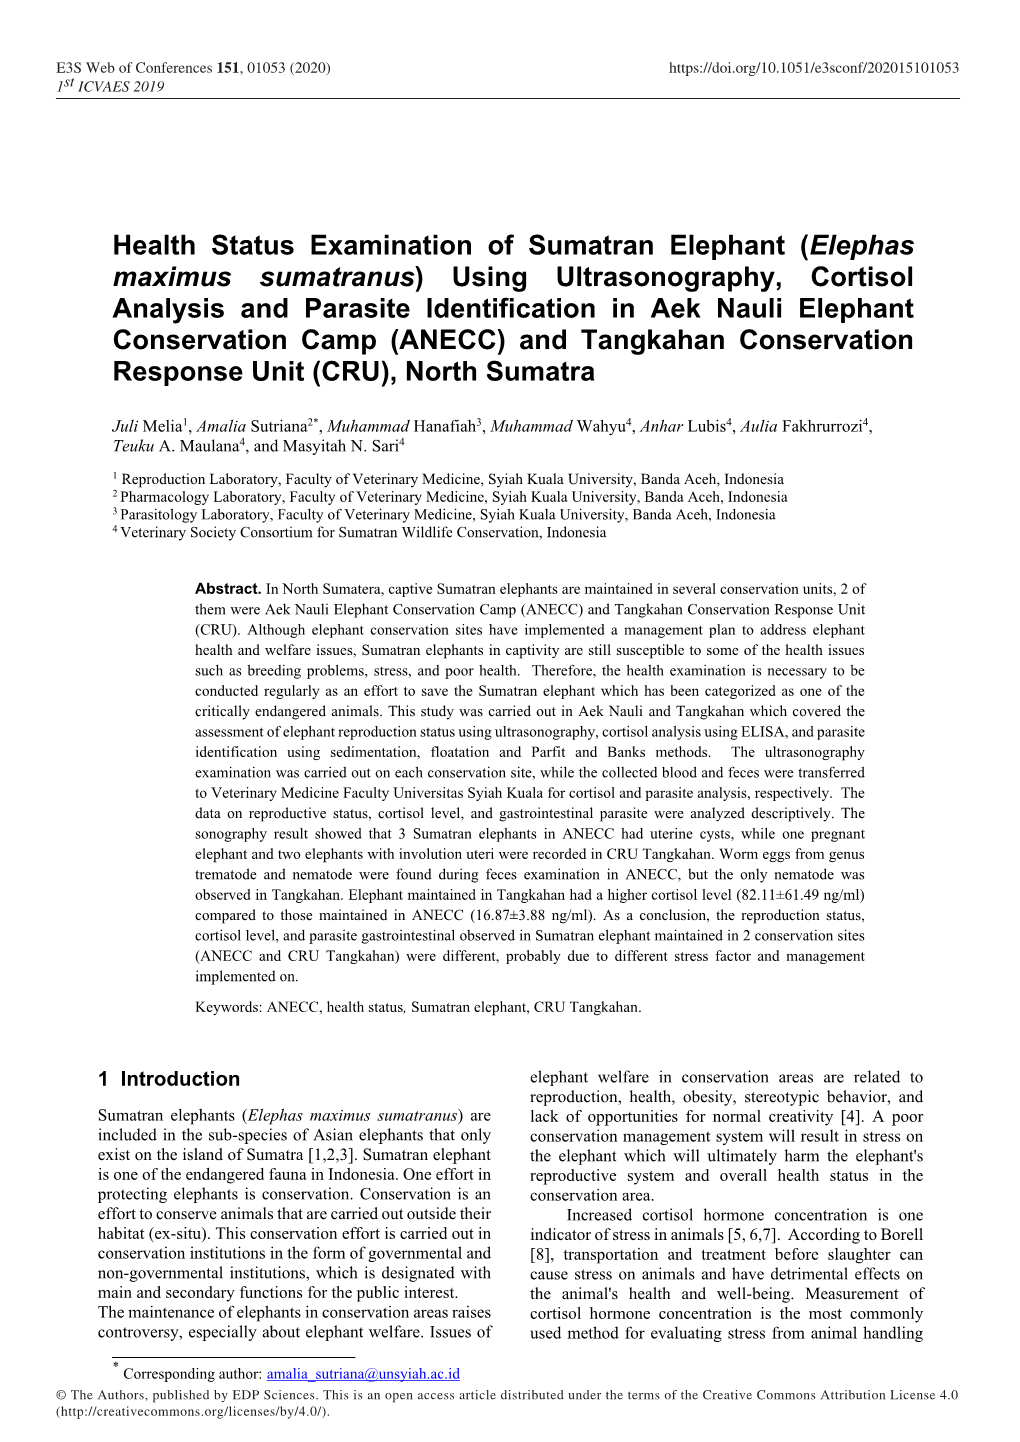 Health Status Examination of Sumatran Elephant (Elephas